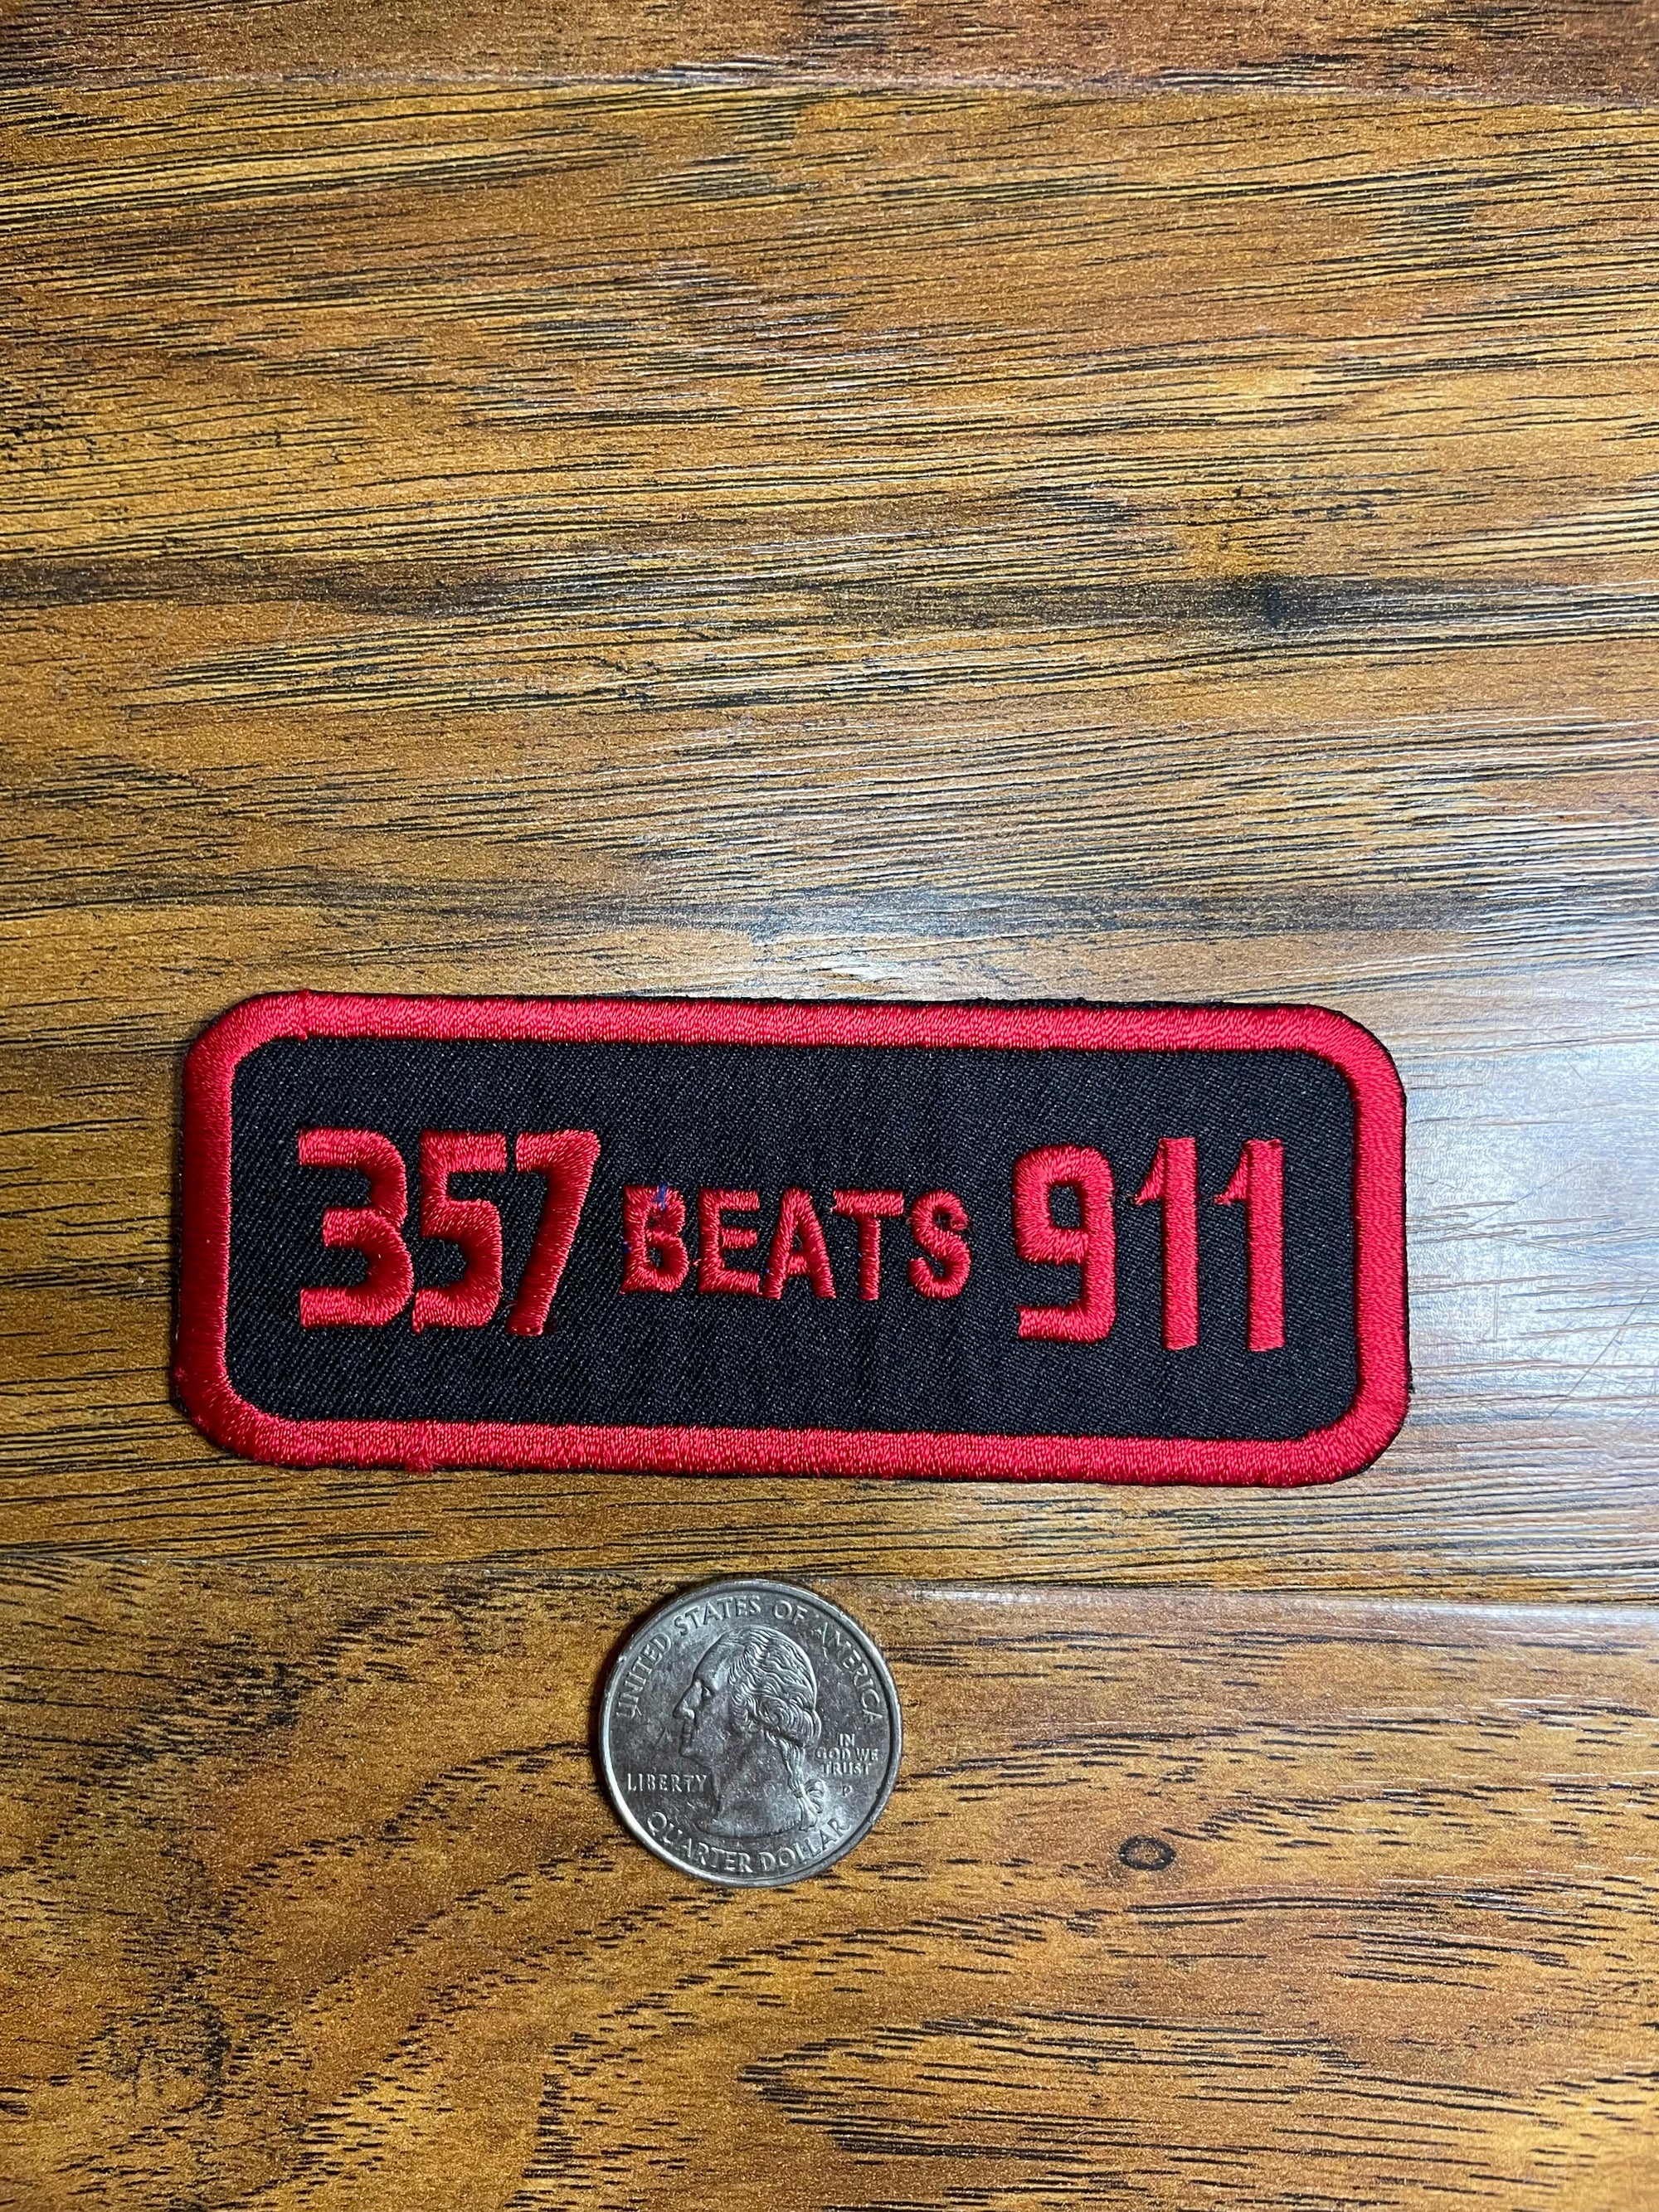 357 Beats 911